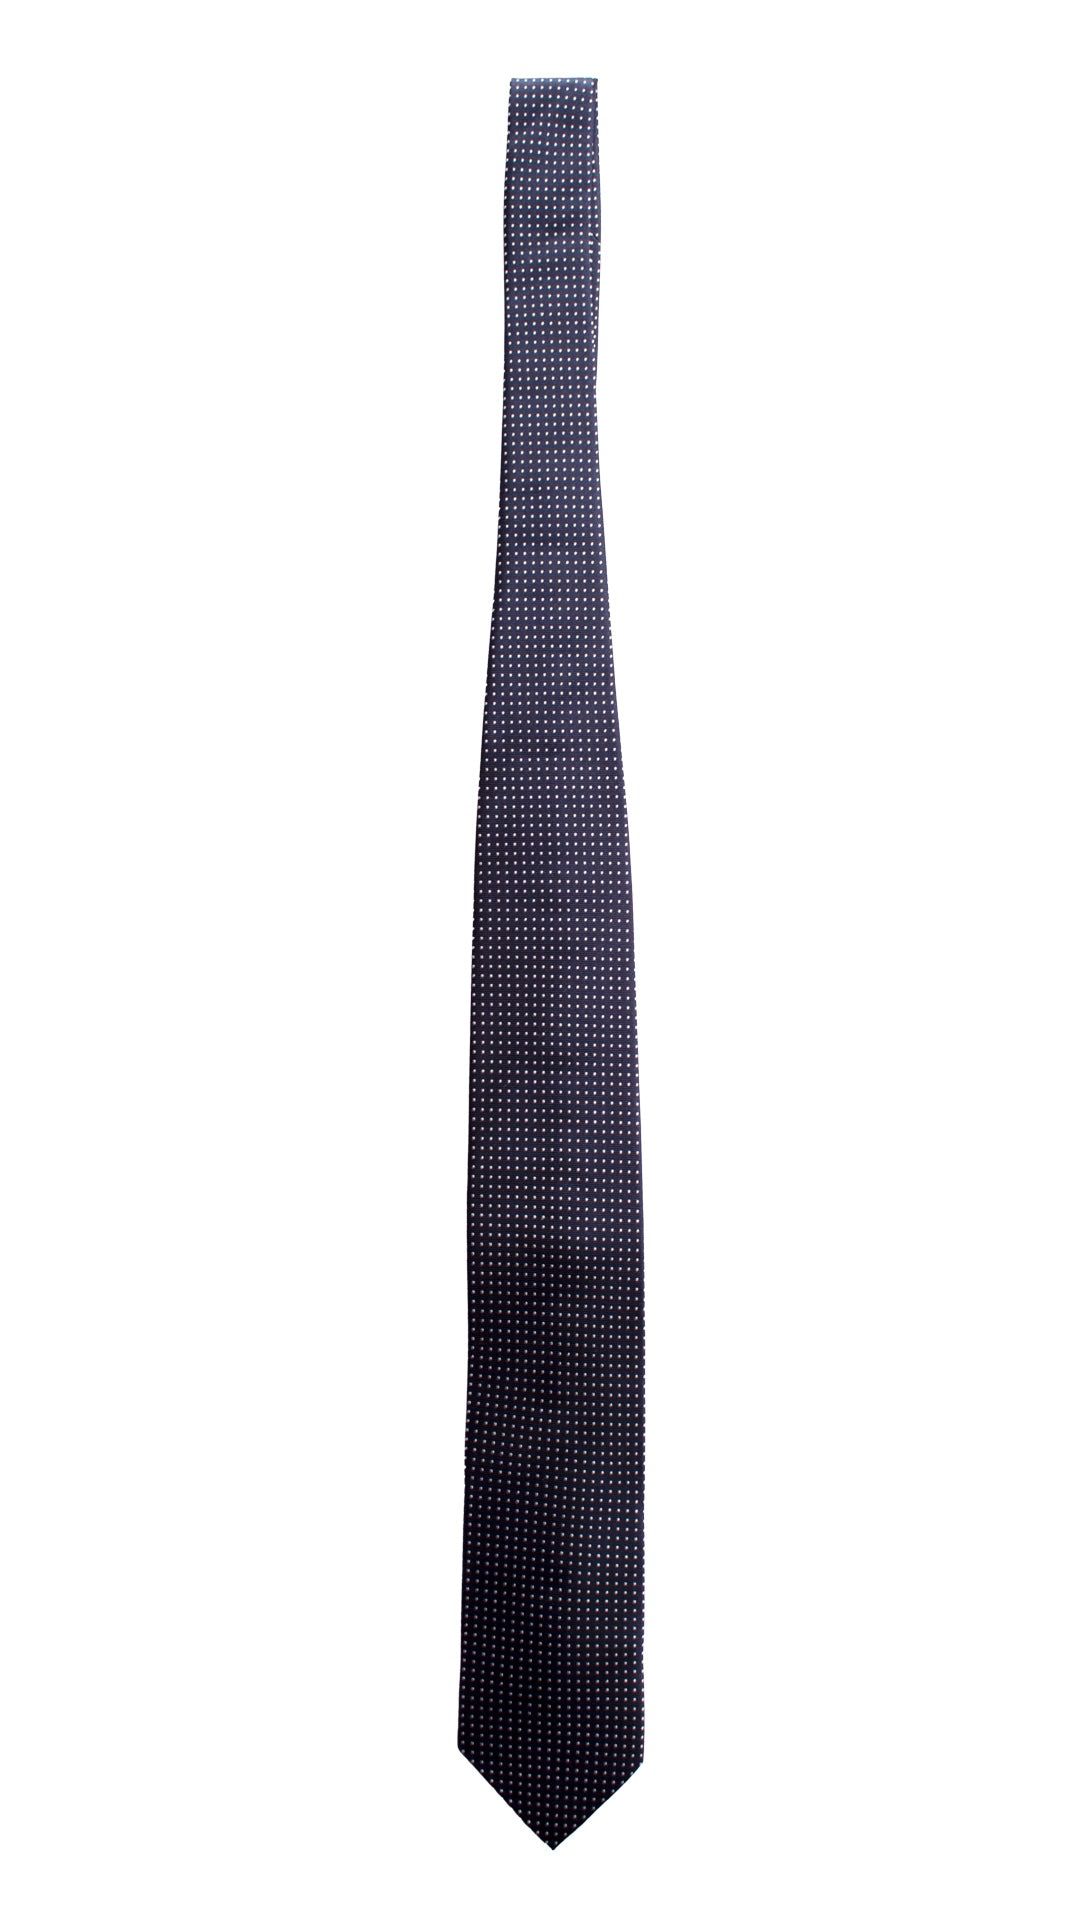 Cravatta da Cerimonia di Seta Blu Navy Pois Bianco CY4700 Intera